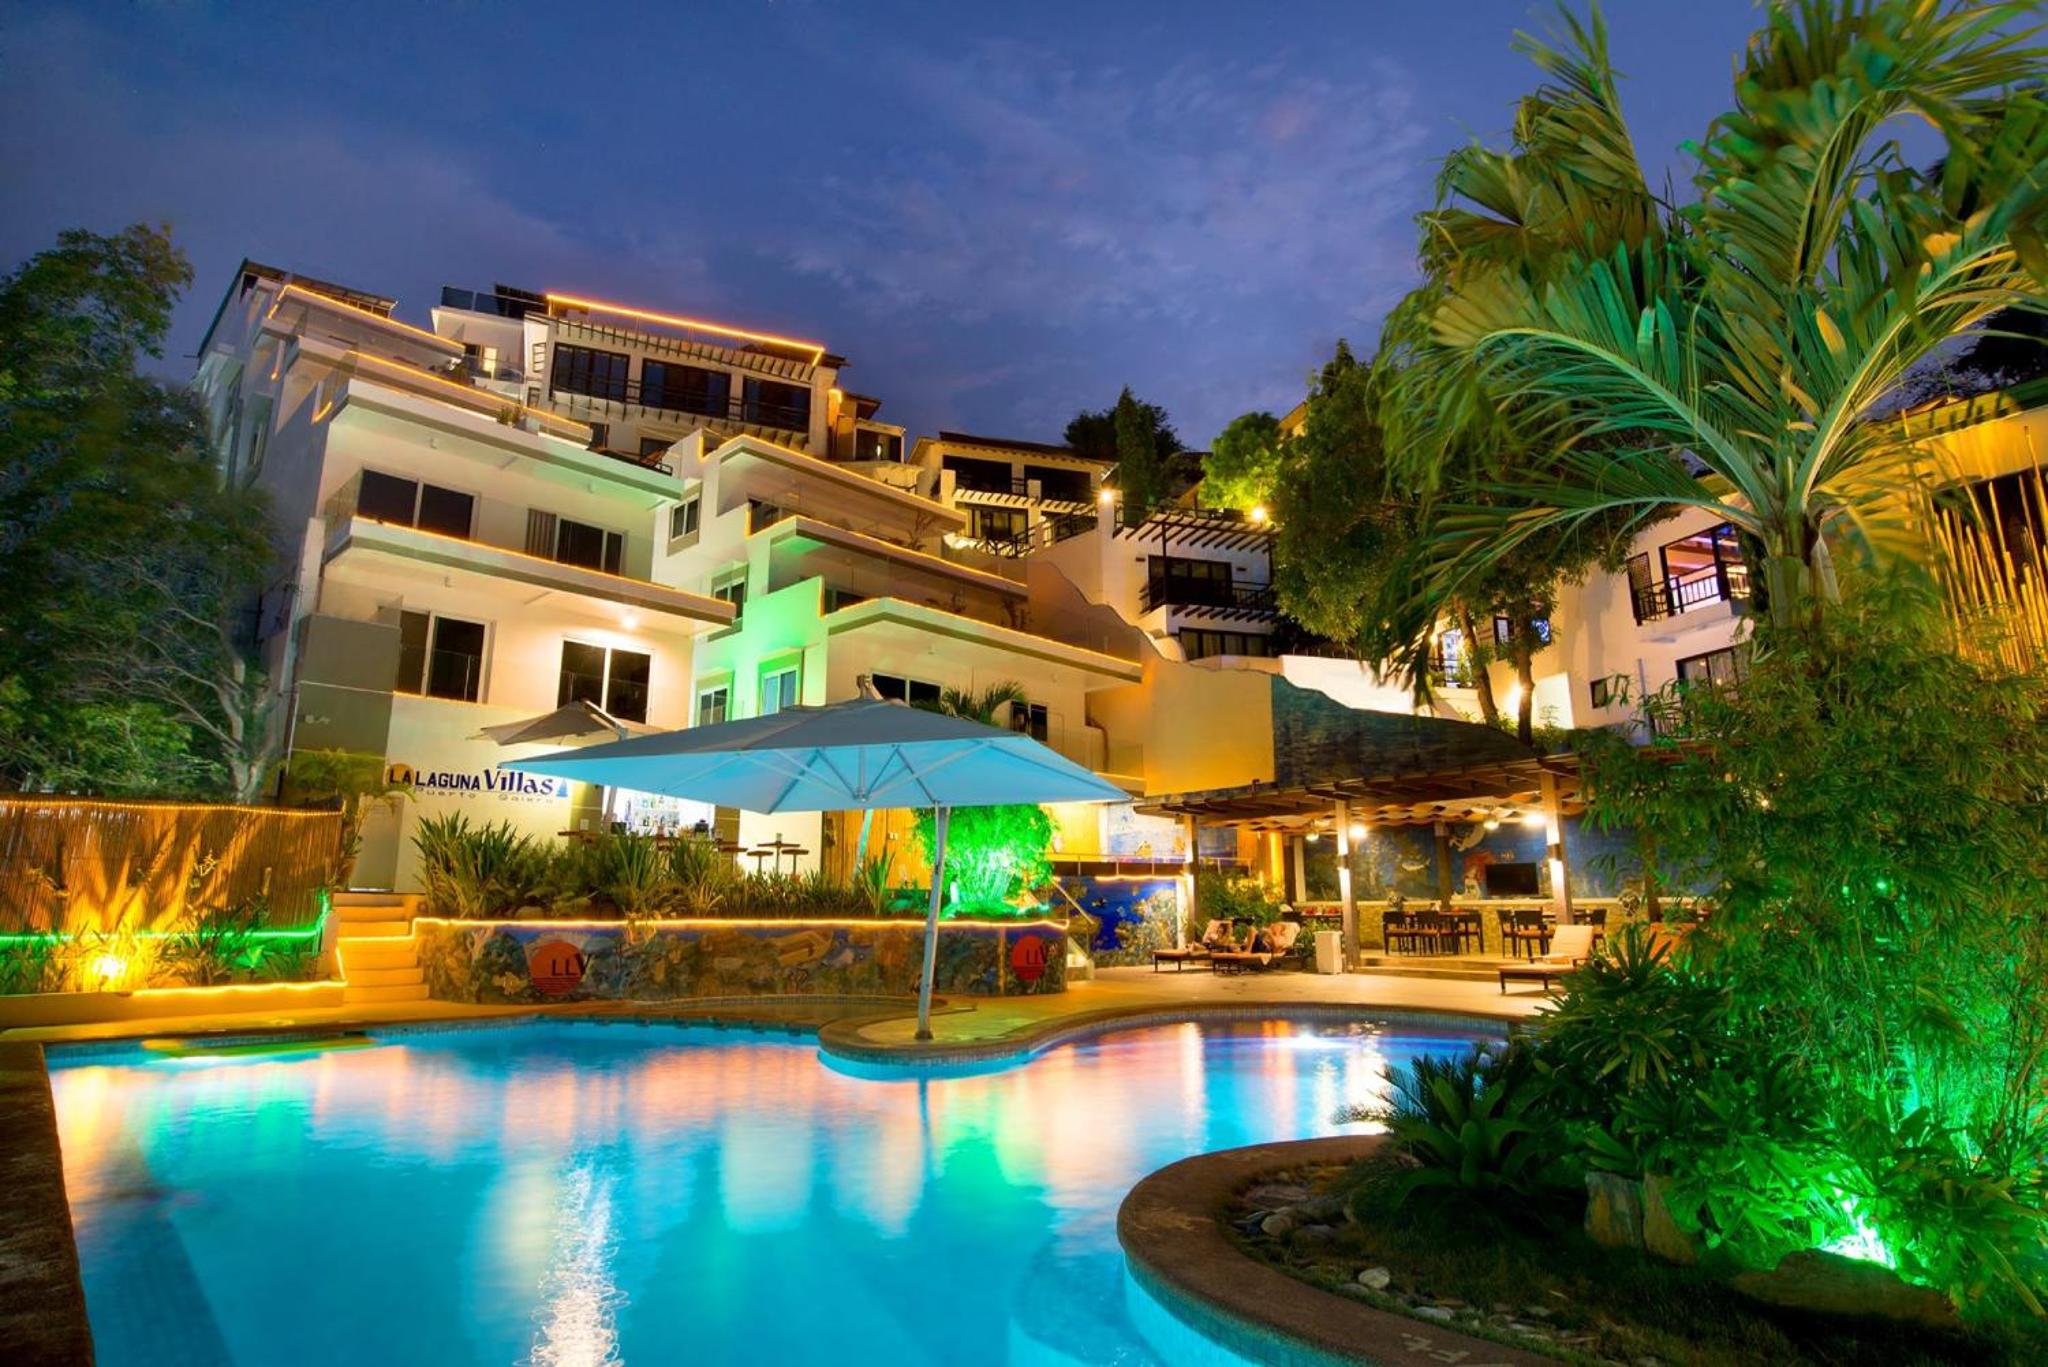 Lalaguna Villas Luxury Resort